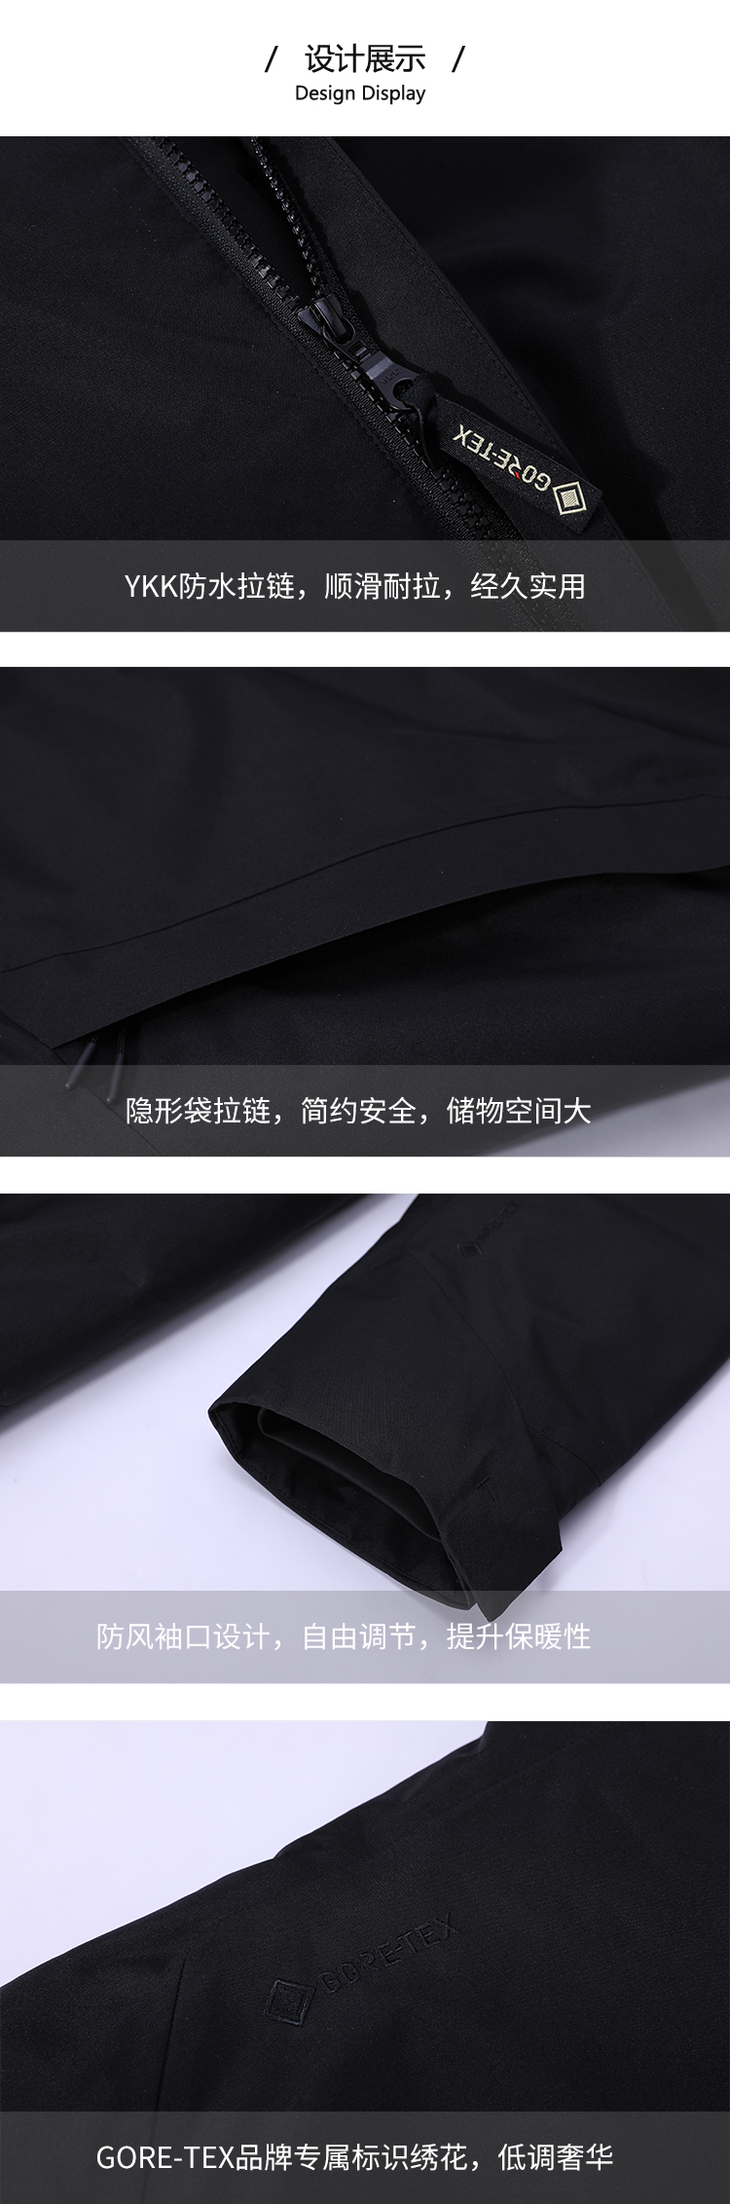 S52001 GORE-TEX  男式中长款休闲防寒服